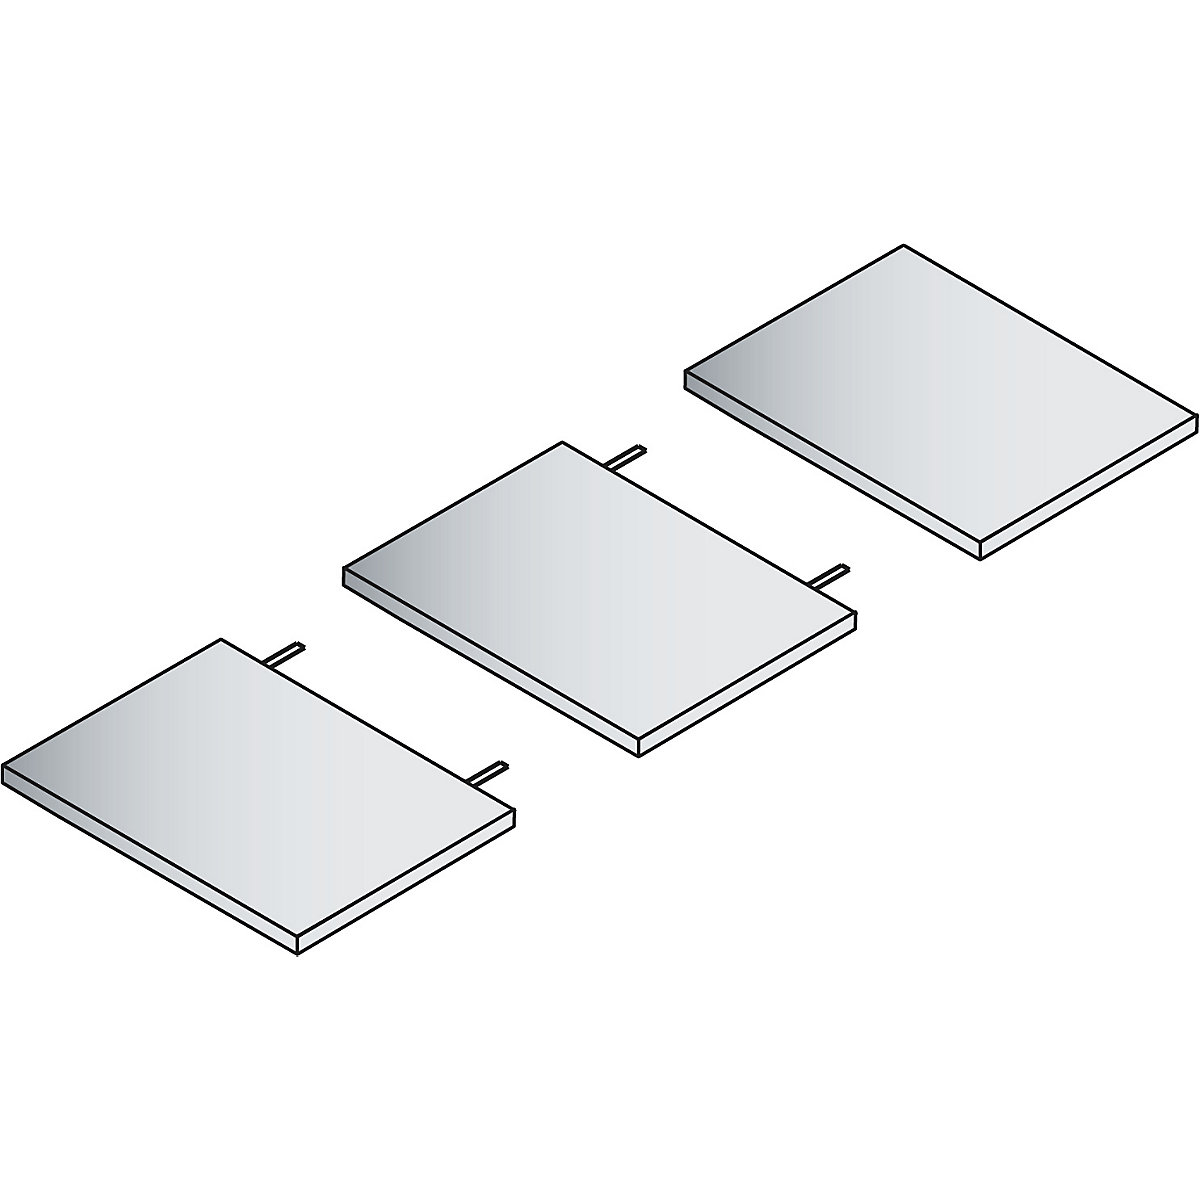 Shelf for office steel shelf unit – C+P, light grey, HxWxD 24 x 270 x 352 mm, pack of 2